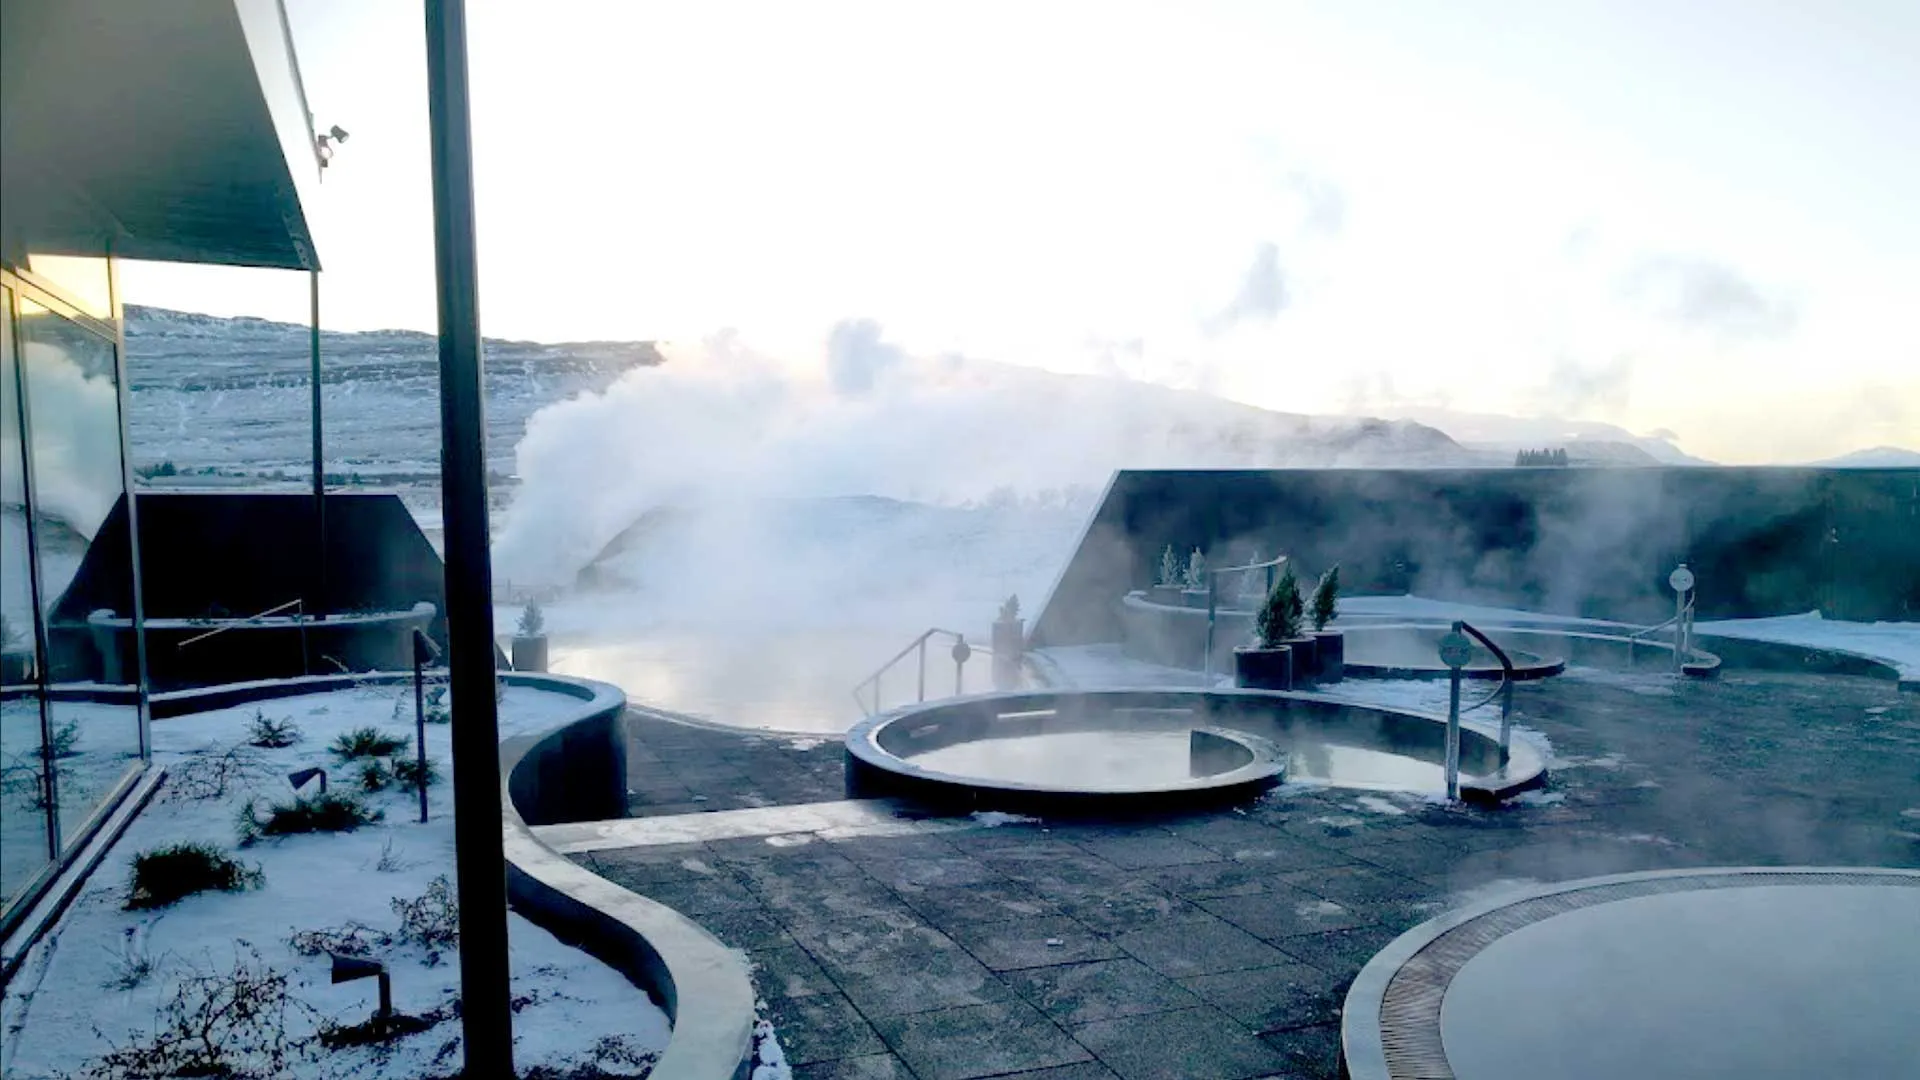 Krauma Spa in Iceland, Europe | Hot Springs & Pools,SPAs,Steam Baths & Saunas - Rated 3.9